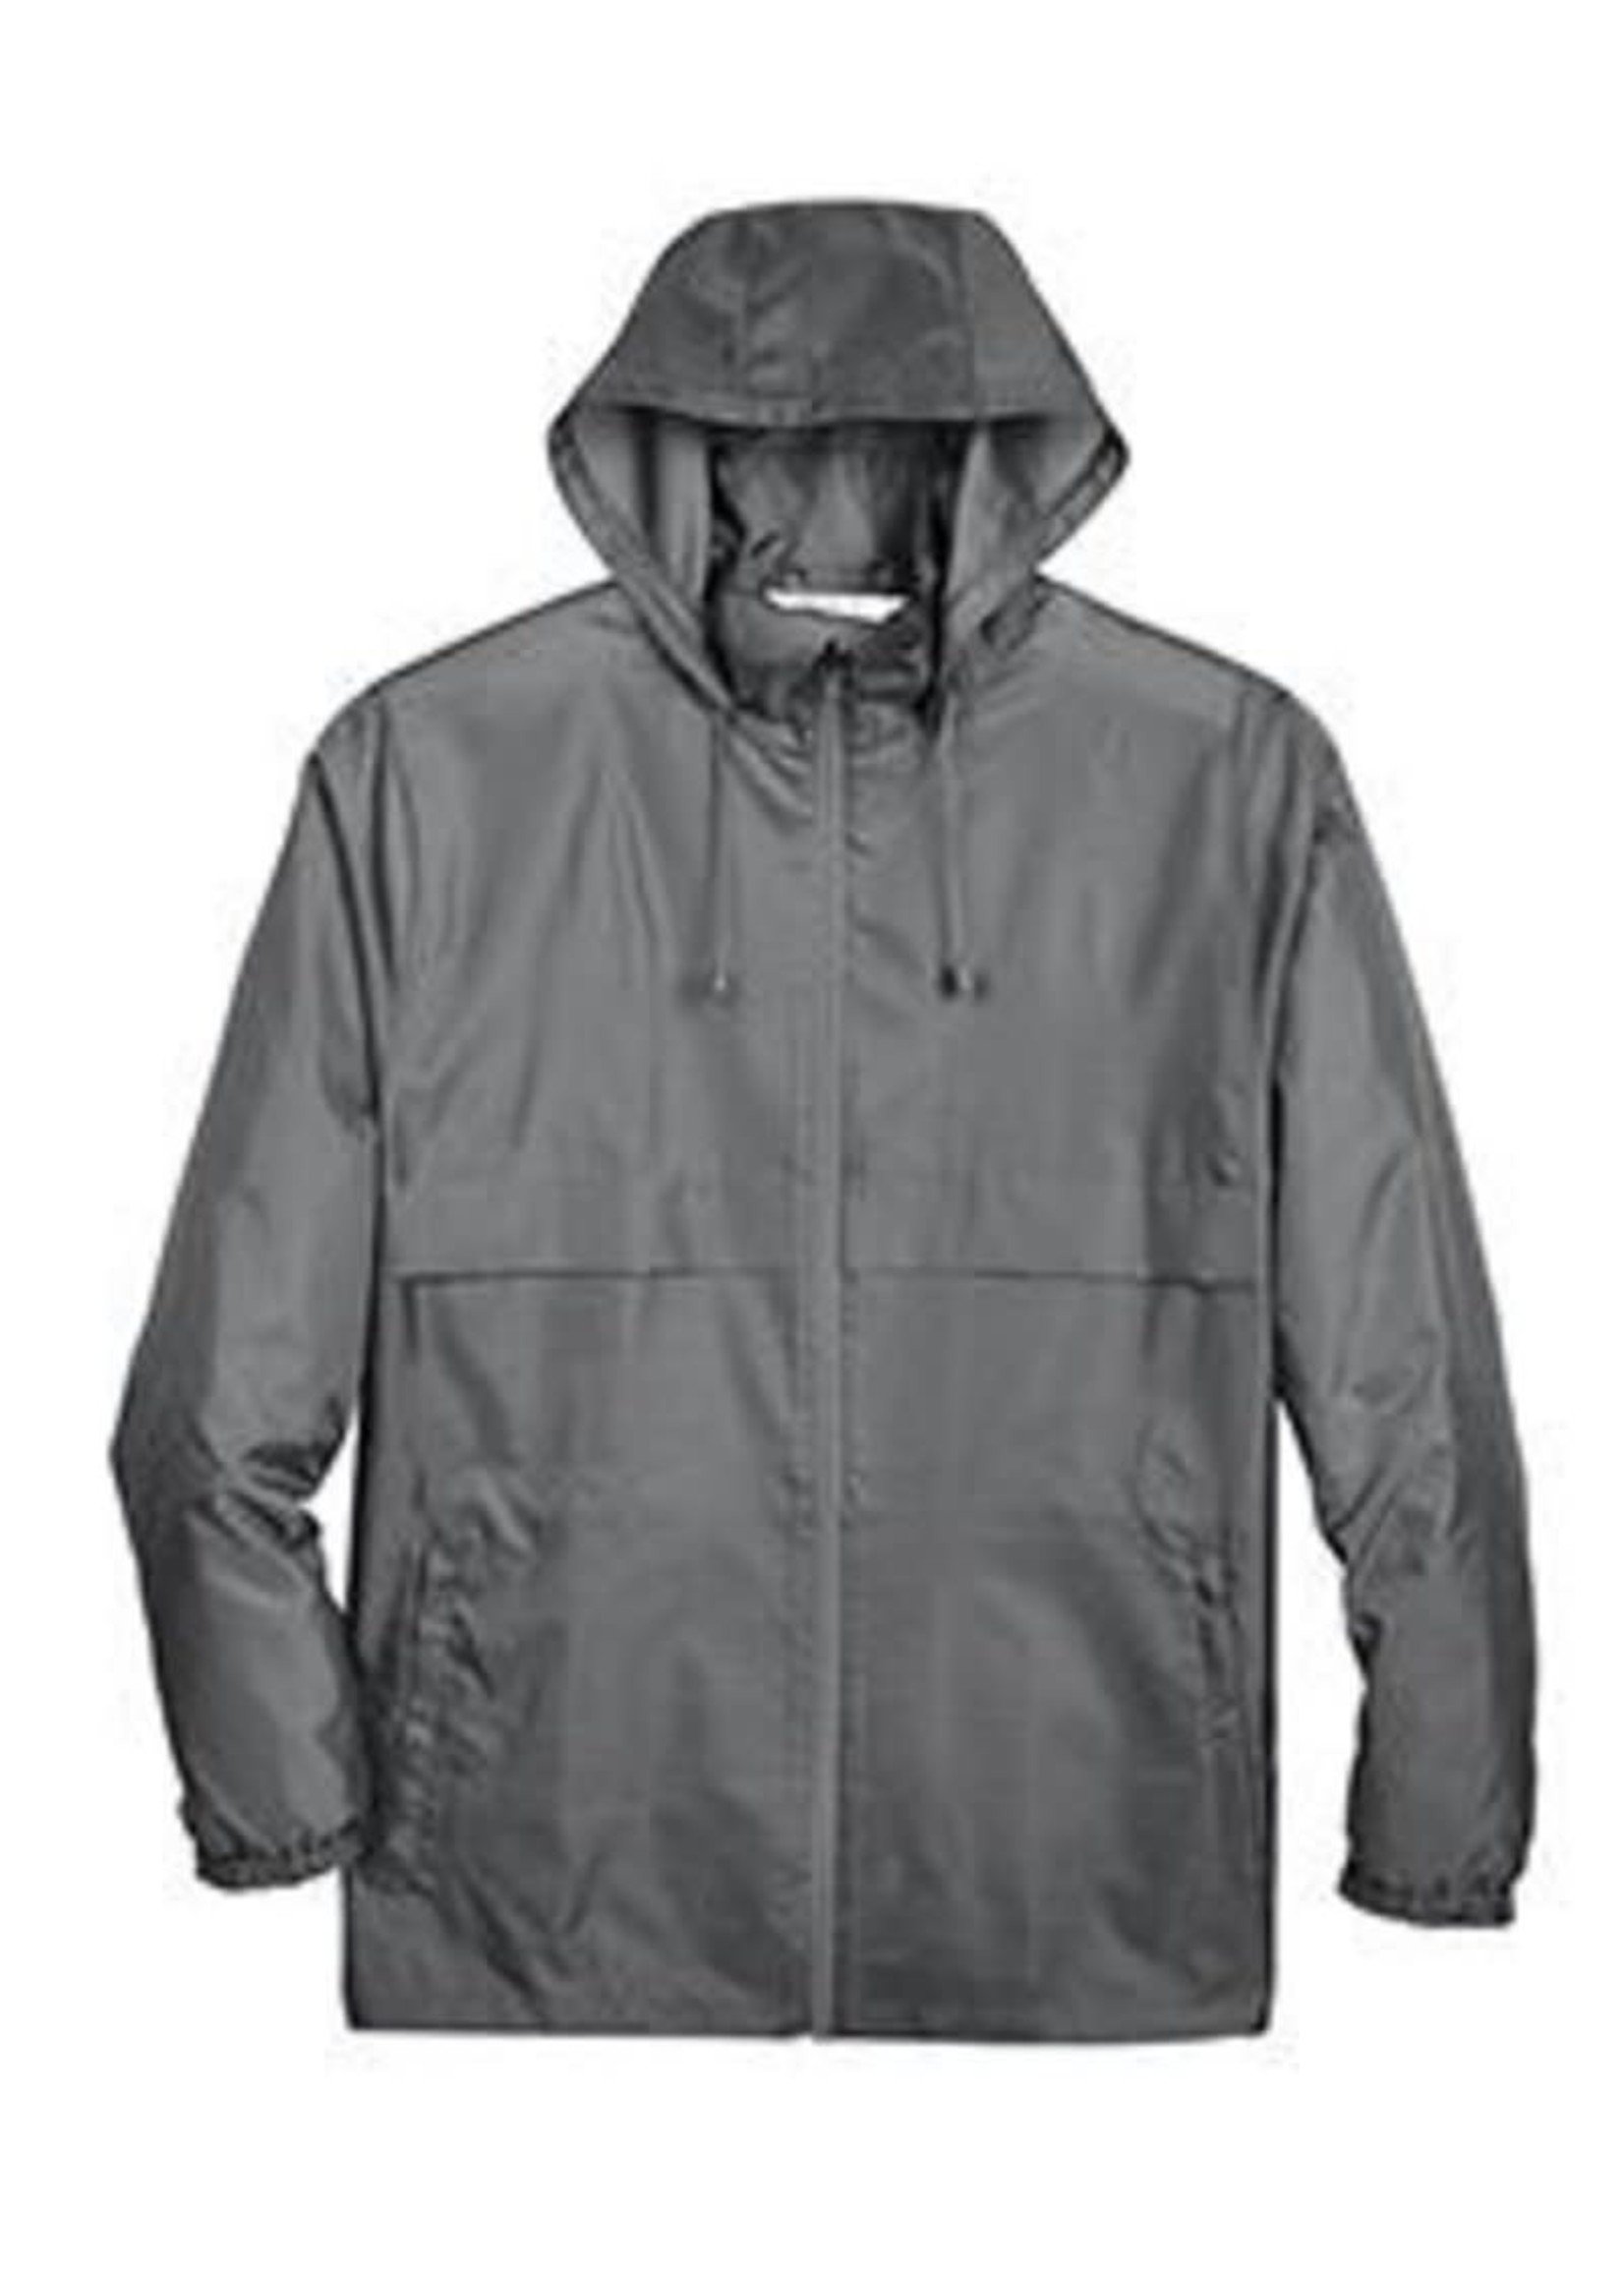 NON-UNIFORM JACKET - Custom Lightweight Jacket with Hidden  Hood grey white or navy